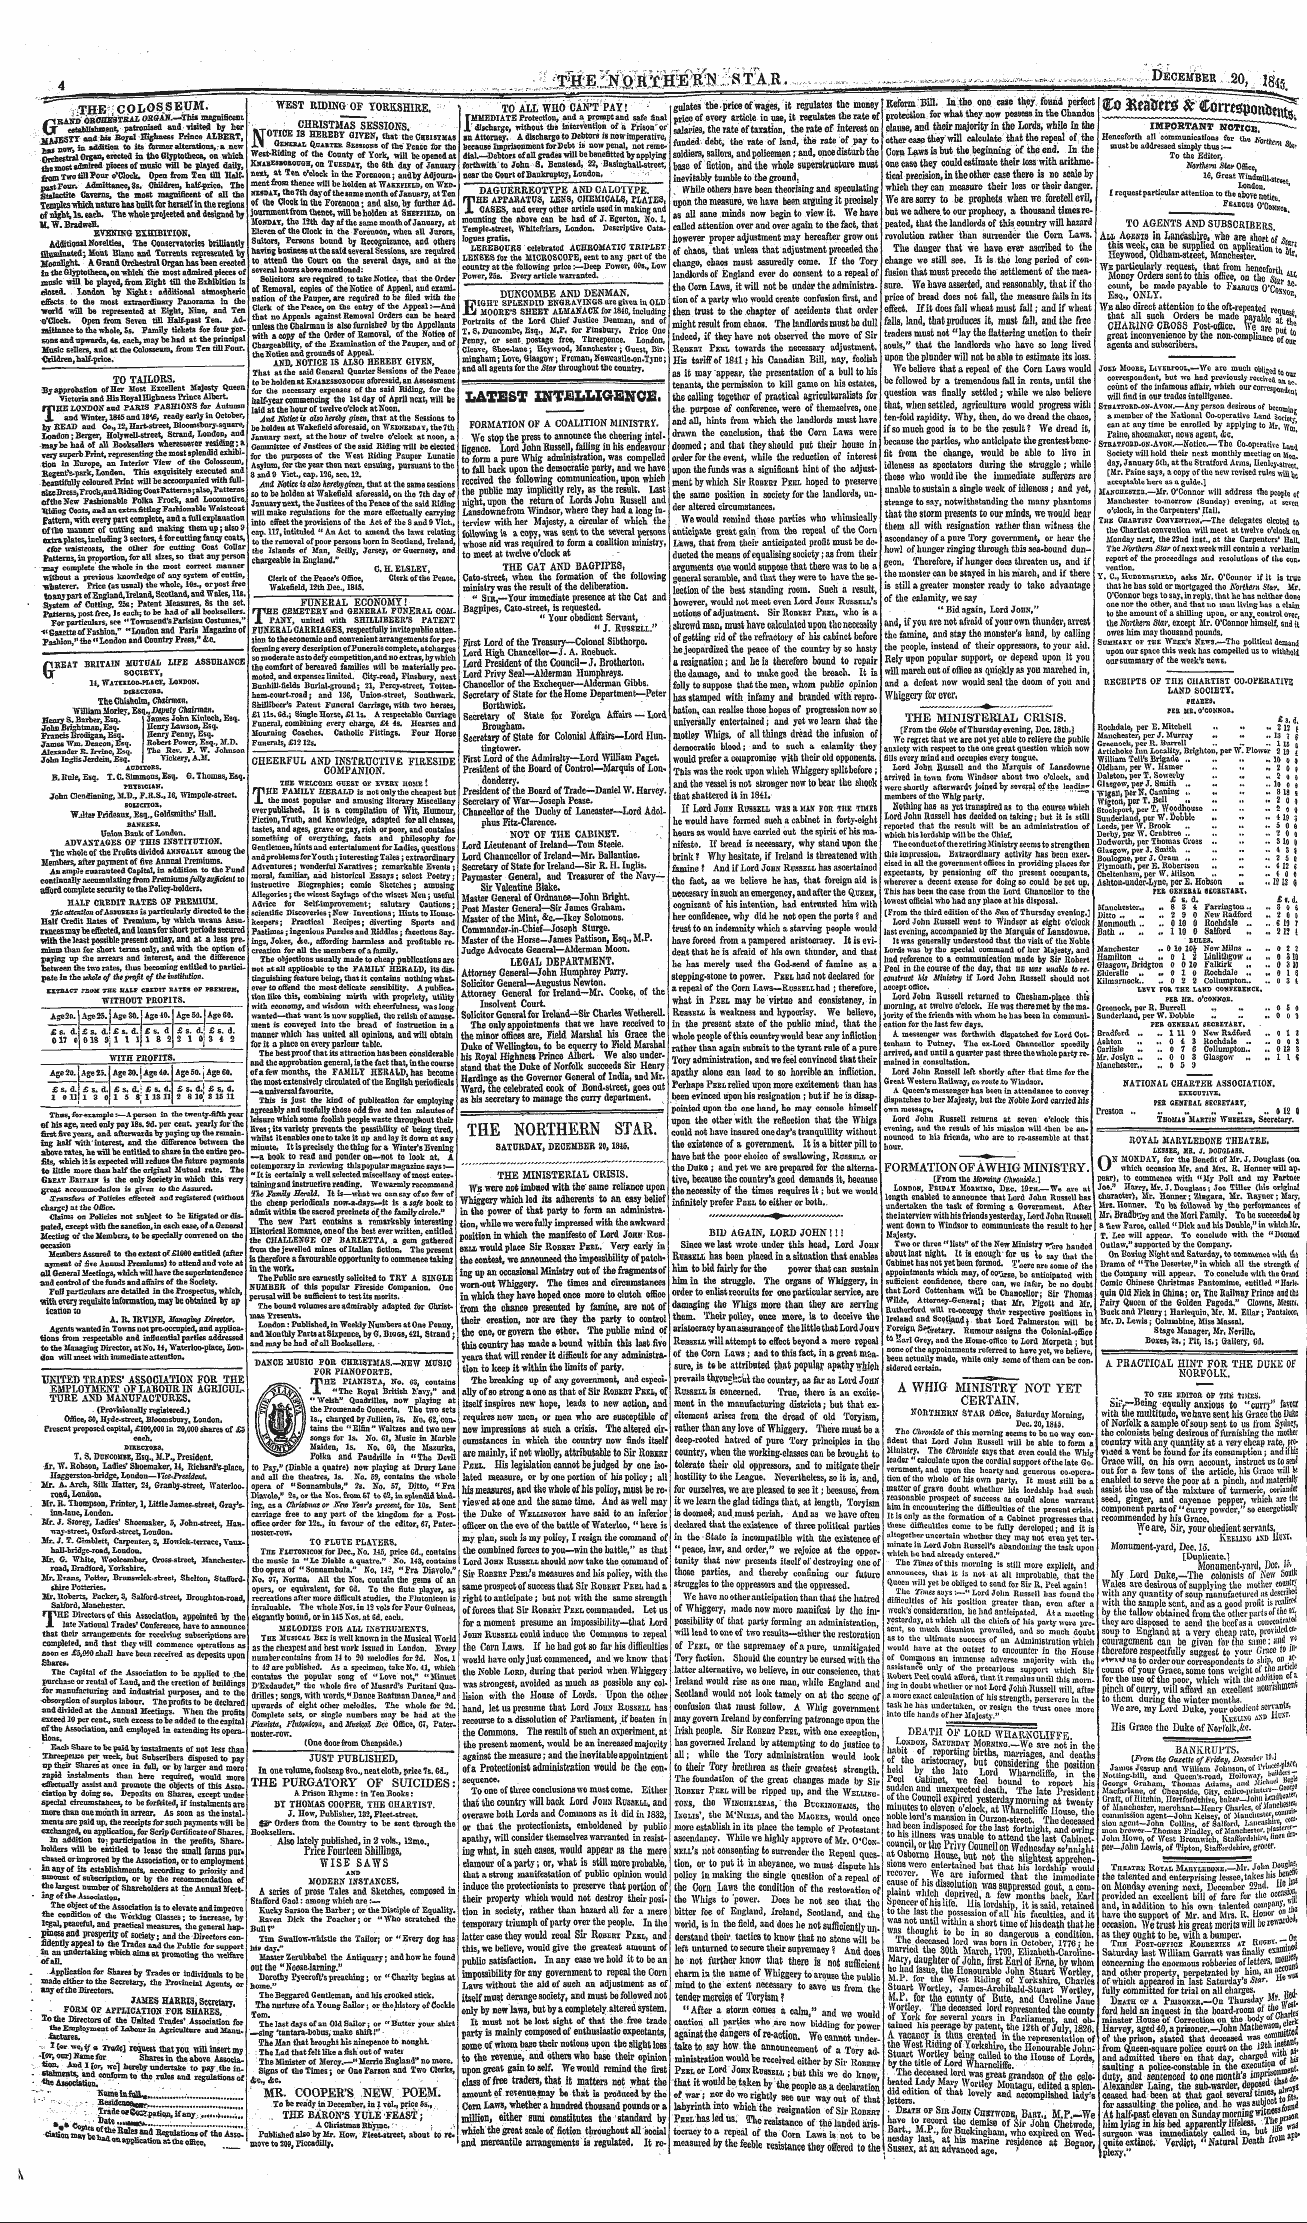 Northern Star (1837-1852): jS F Y, 4th edition - Ad00417